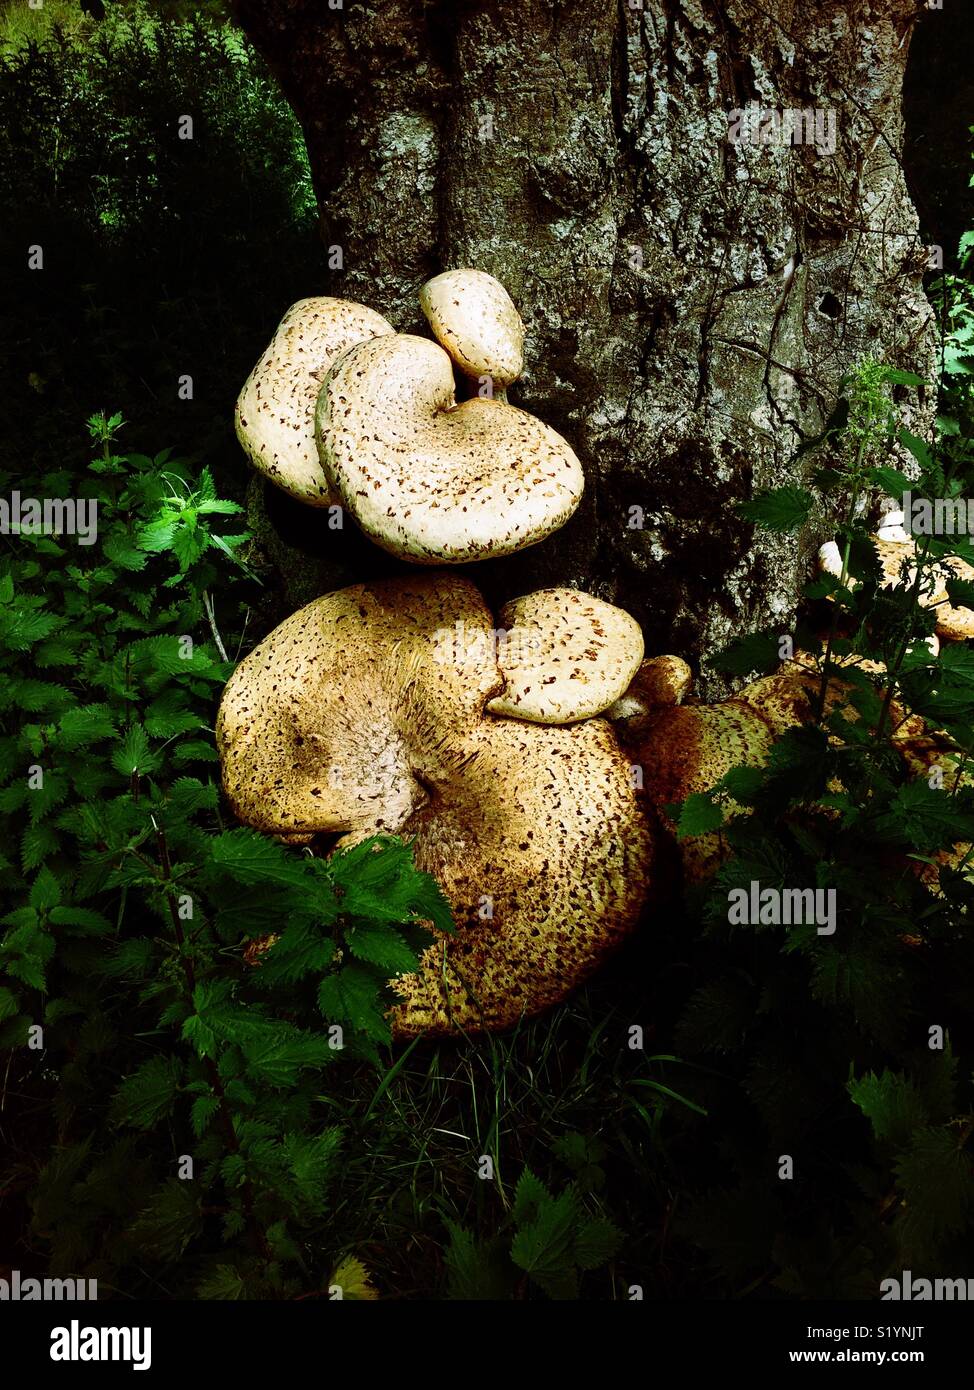 Fungus growing on tree trunk Stock Photo